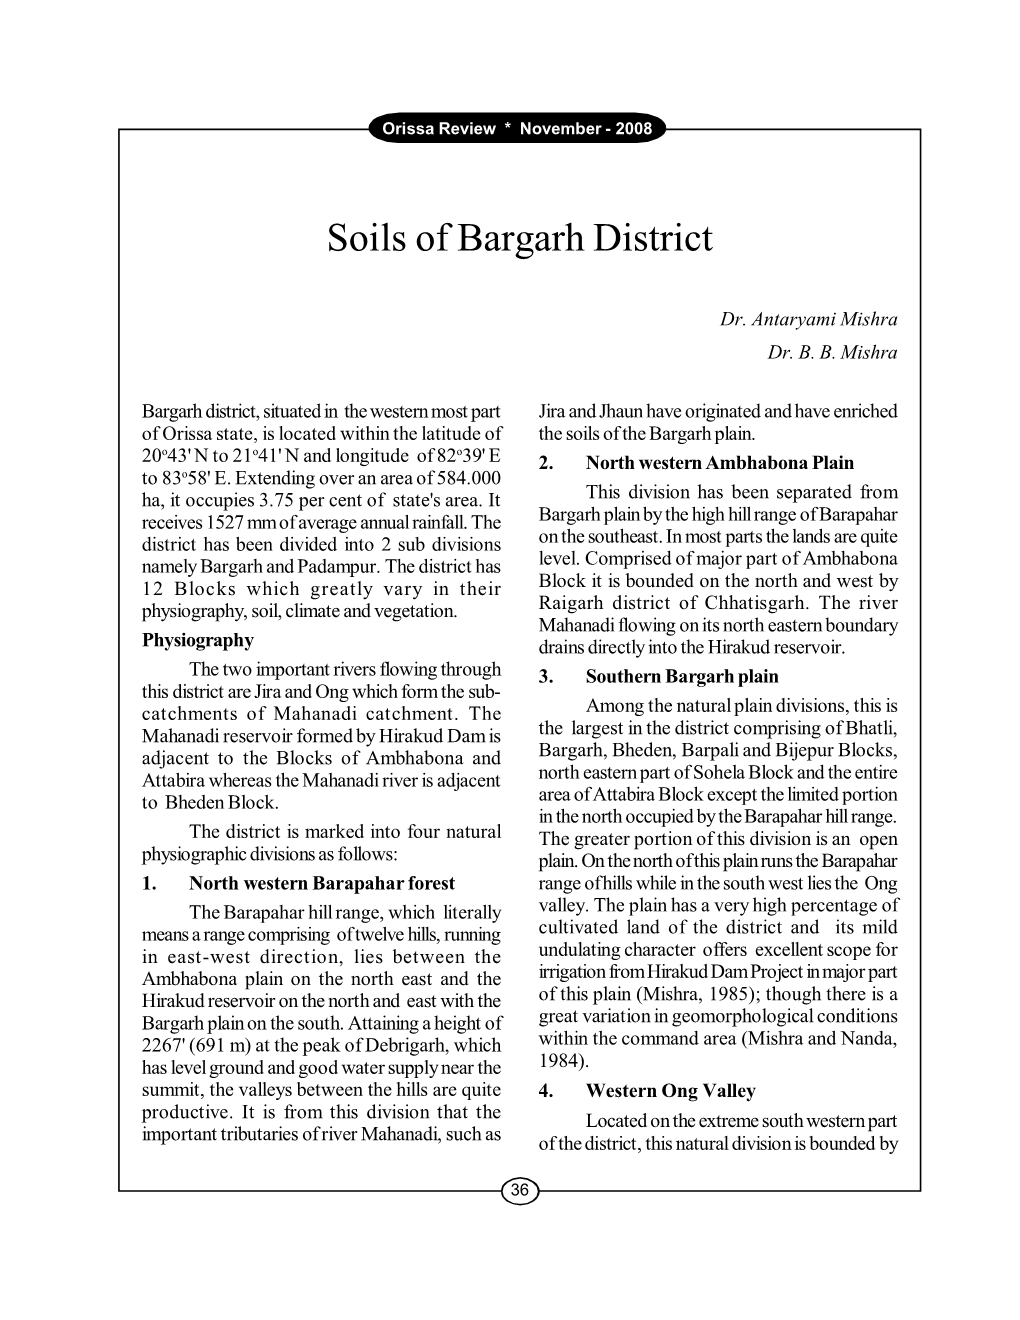 Soils of Bargarh District